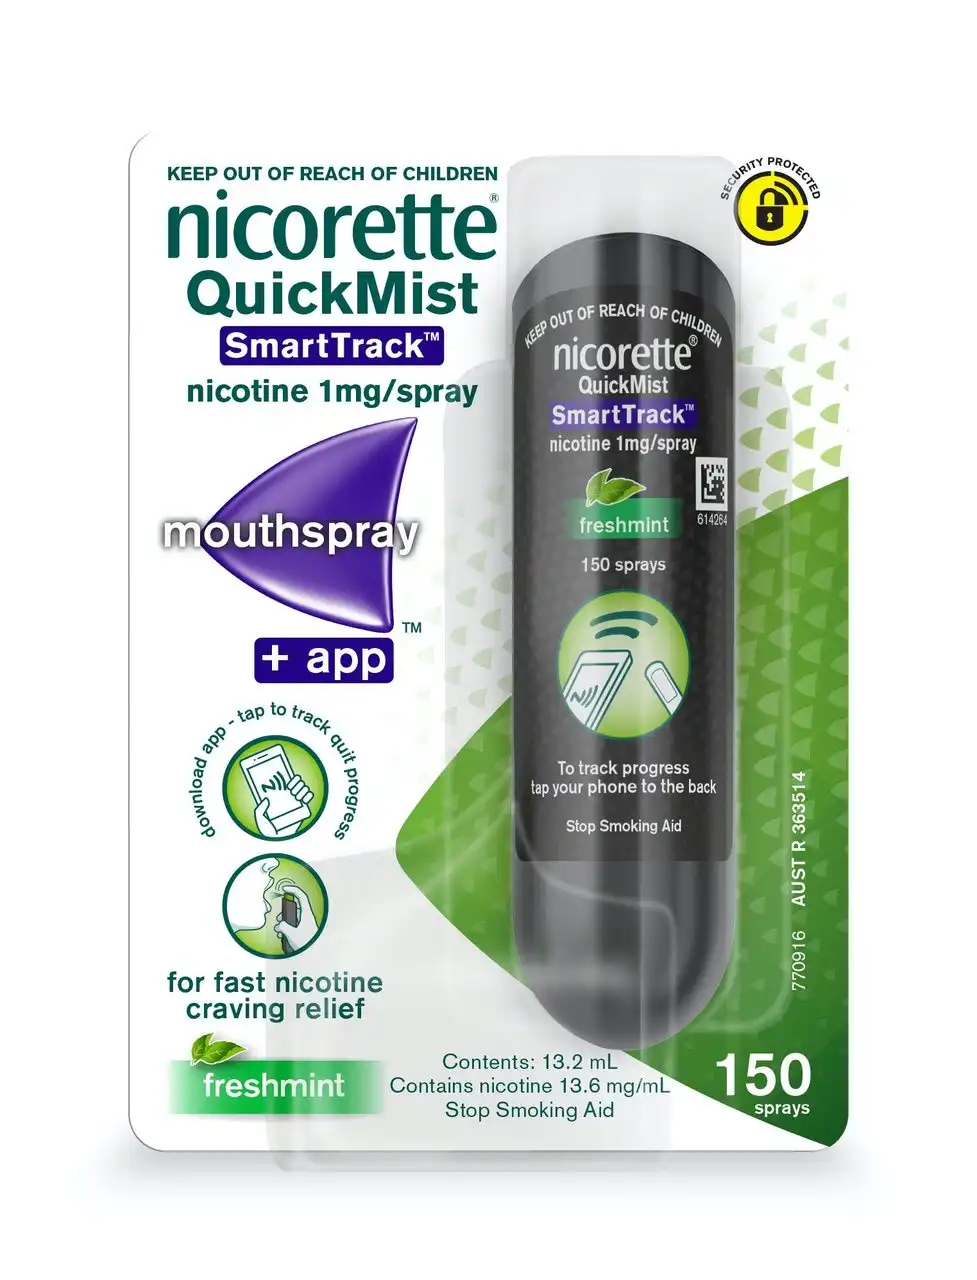 Nicorette Quit Smoking QuickMist SmartTrack Nicotine Mouth Spray Freshmint 150 Pack